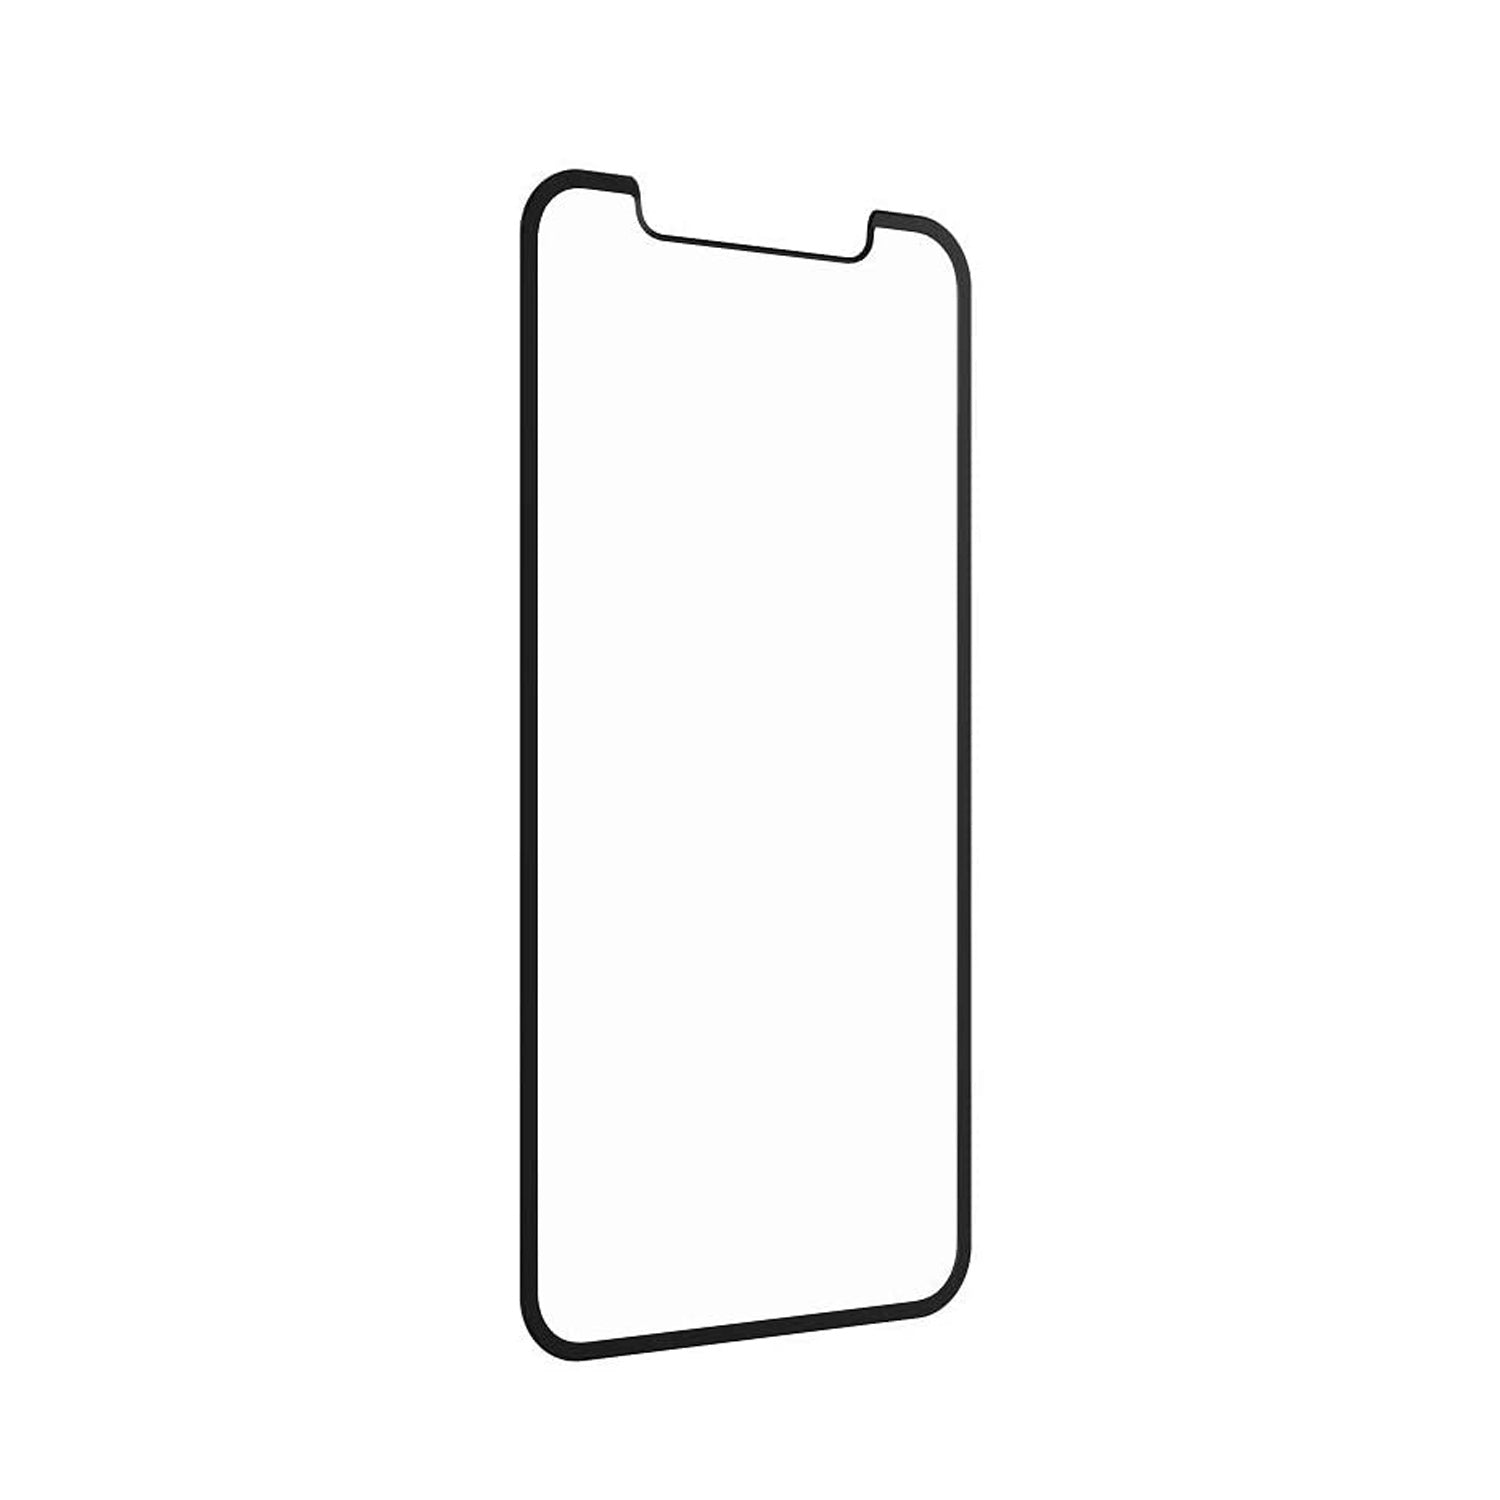 ZAGG InvisibleShield iPhone 11 Pro Max 360 Protection Case + Glass Elite Edge+ Screen Protector